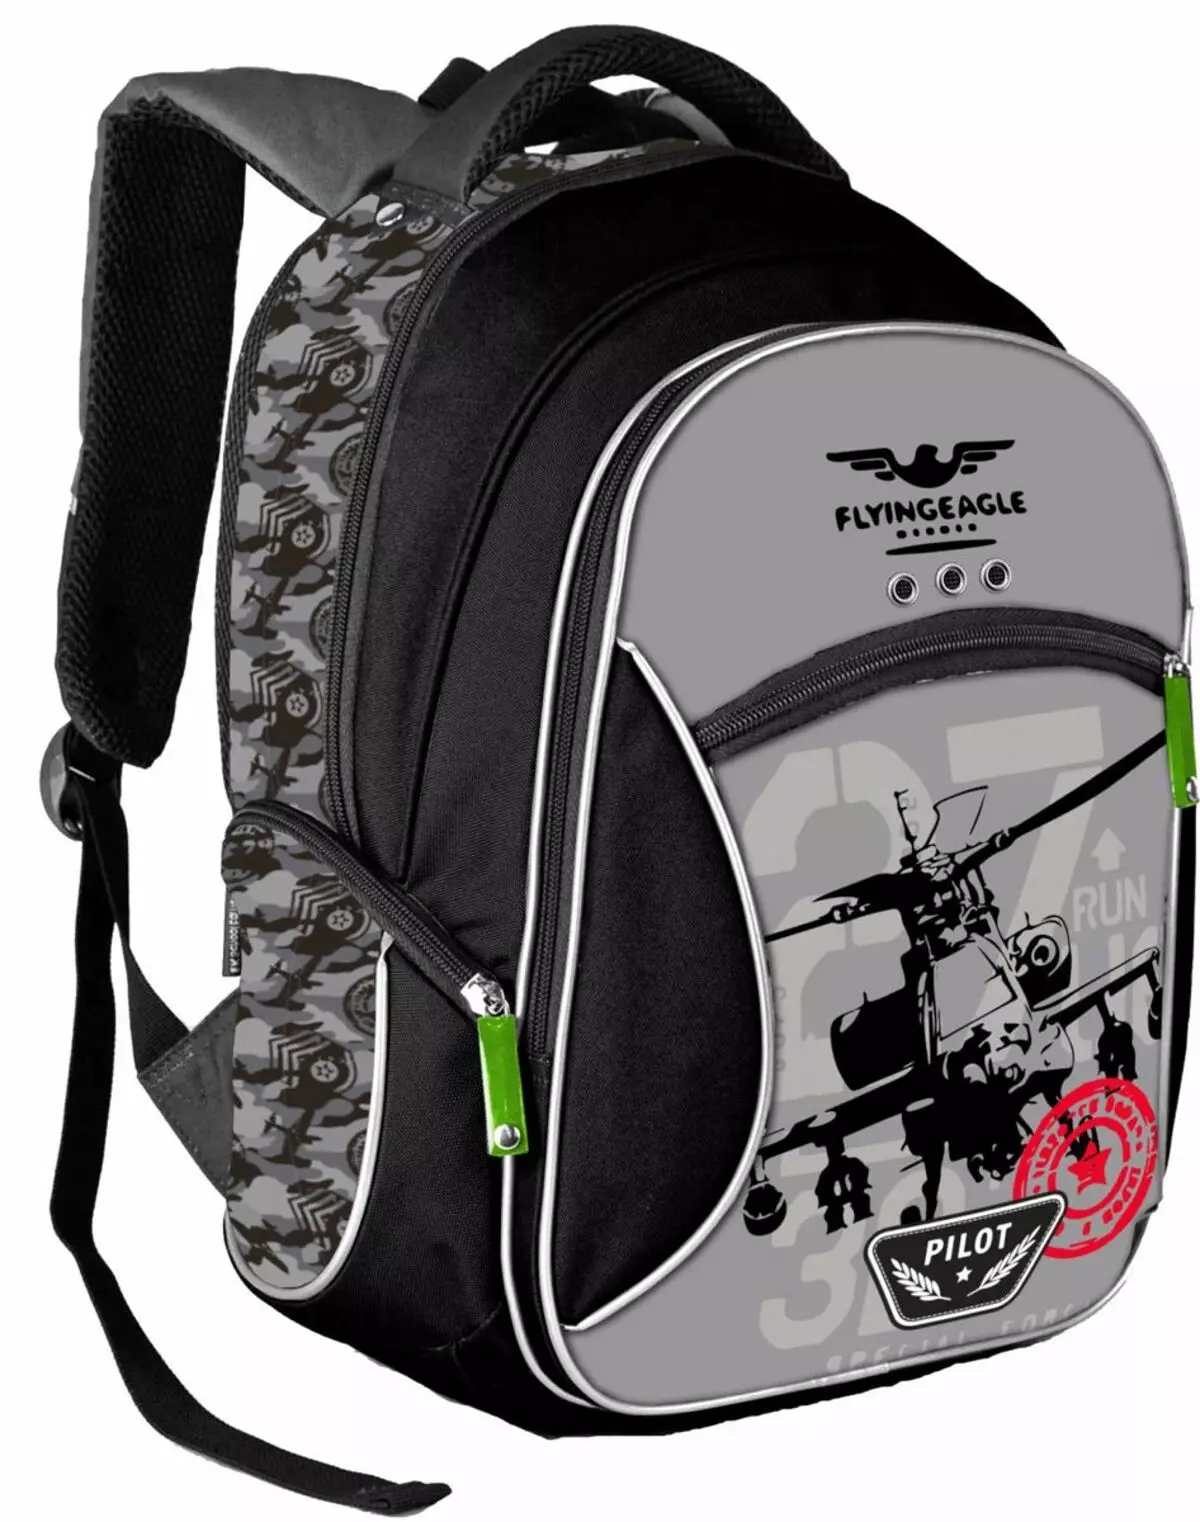 Backpacks ଏବଂ Erich Krause ପଦବାଚ୍ୟ: କାରଣ ବାଳିକା ବିଦ୍ୟାଳୟ backpacks ଏବଂ ପ୍ରଥମ-graders ବାଳକମାନଙ୍କୁ, teens, ergonomic ପୁନଃ ଅନ୍ୟମାନଙ୍କ ସହିତ backpacks ପାଇଁ 15465_50